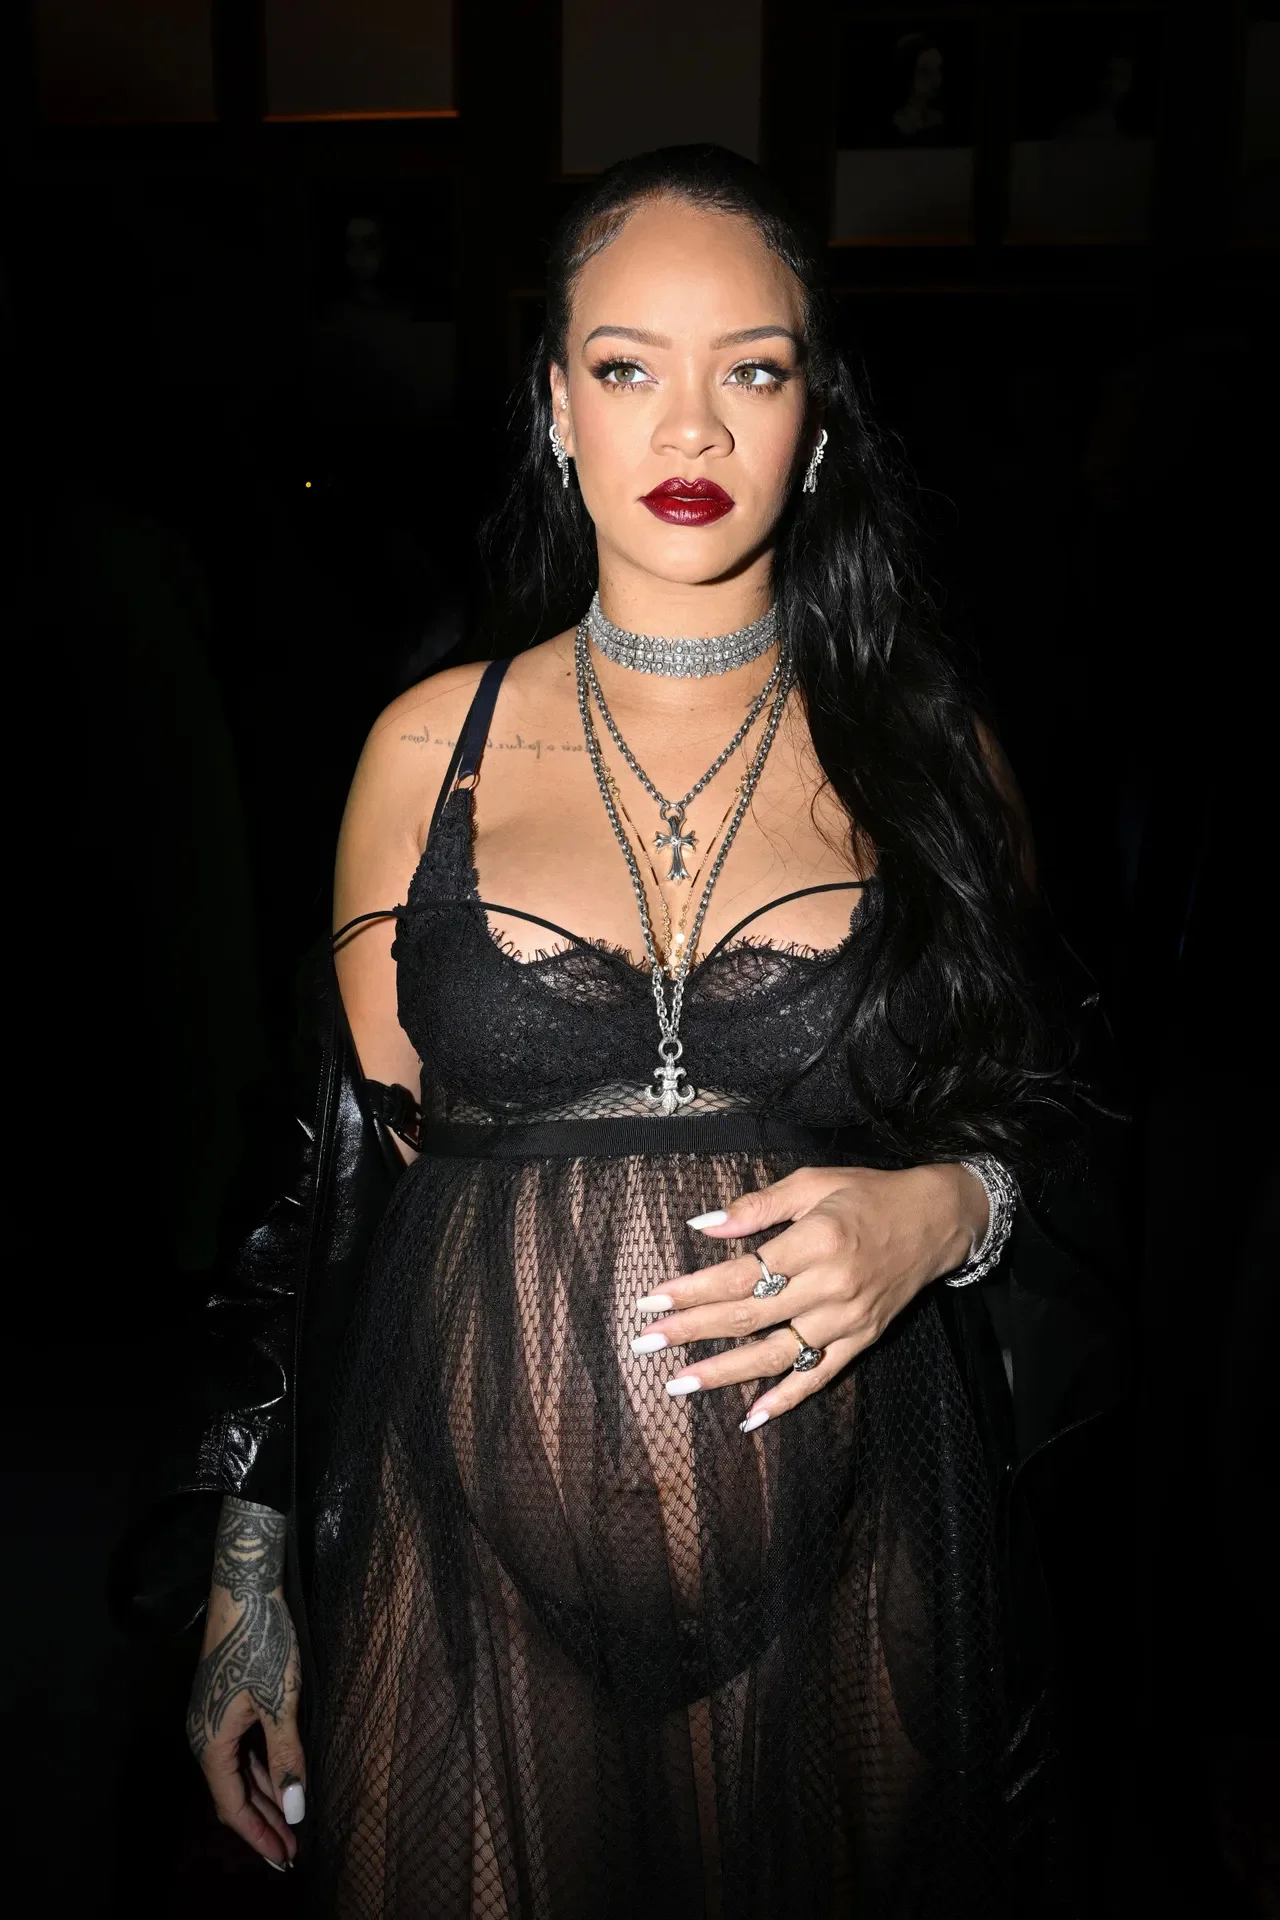 Rihanna at the Paris Fashion Week show